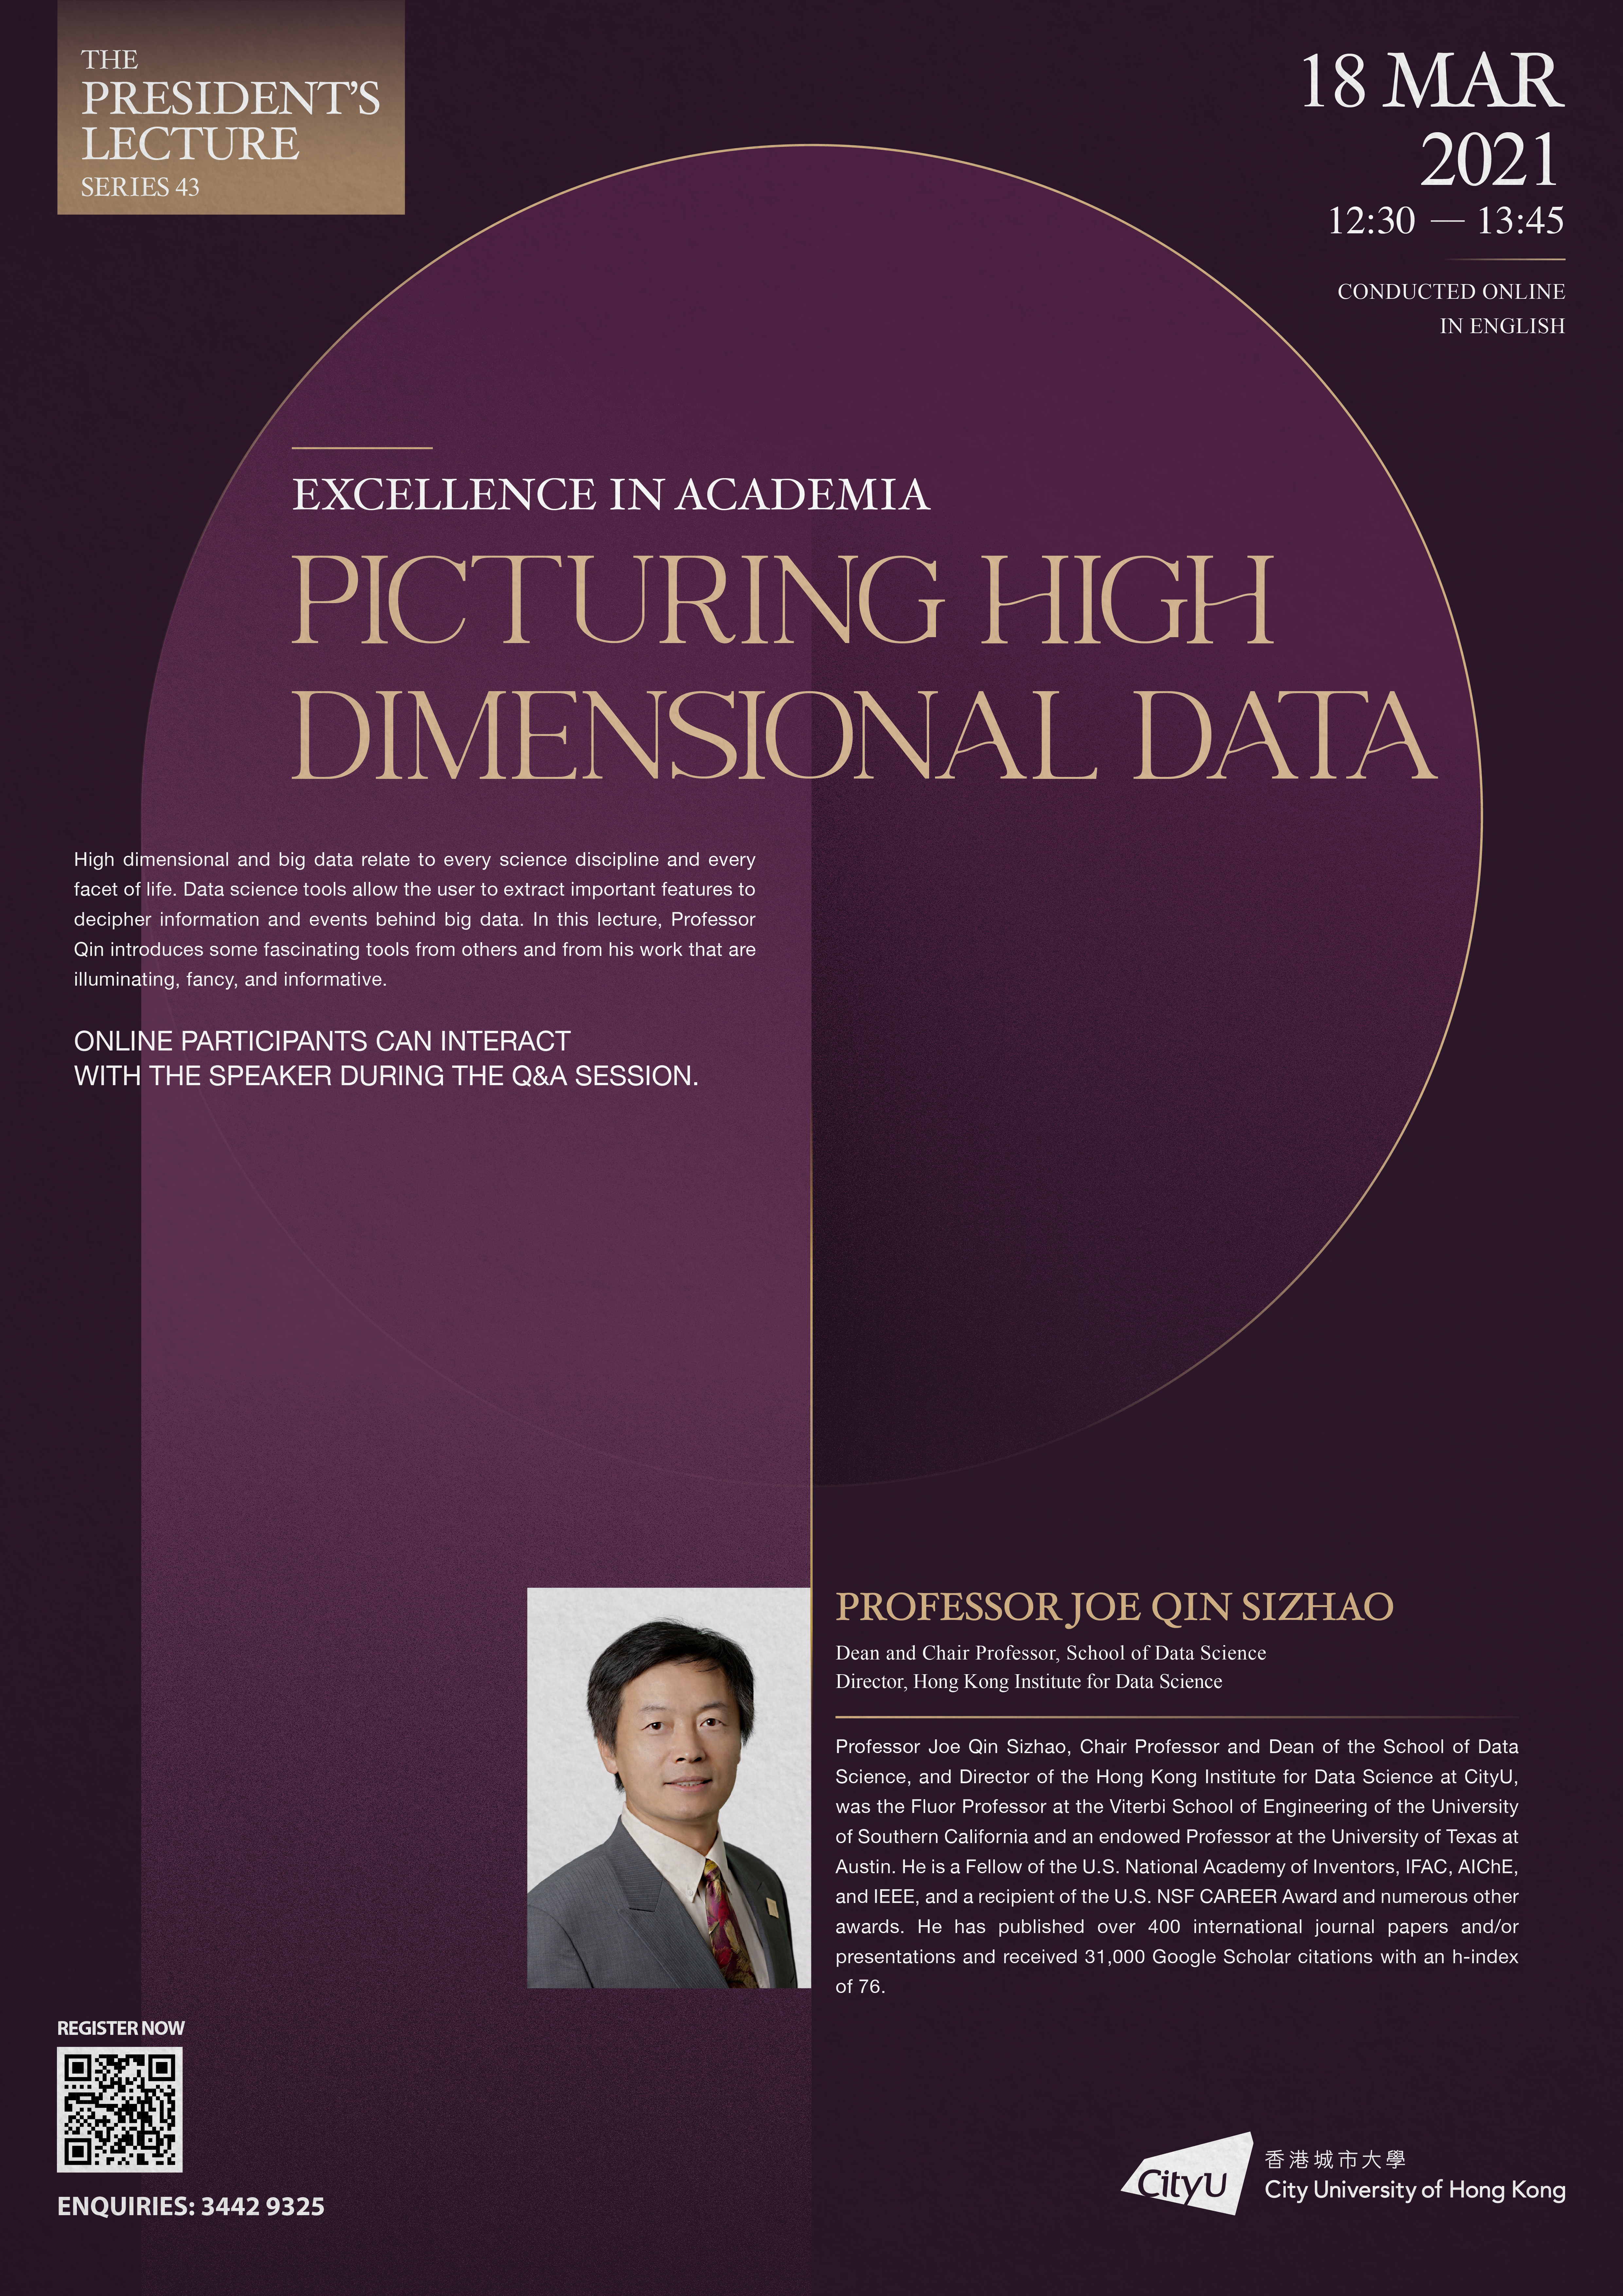 PICTURING HIGH DIMENSIONAL DATA - Professor Joe Qin Sizhao